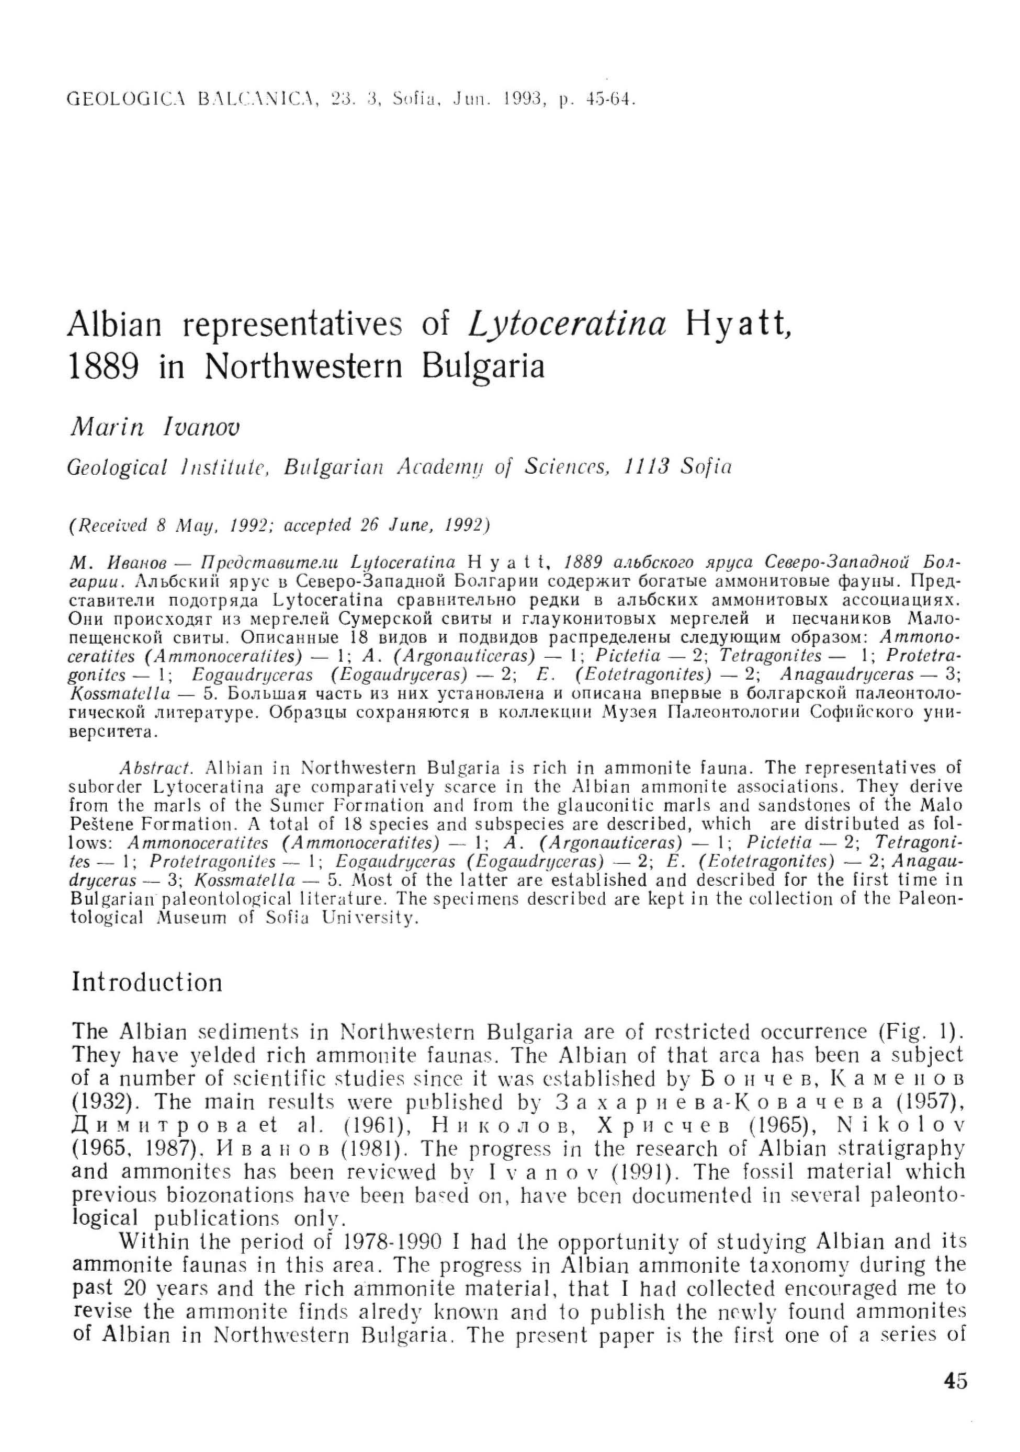 Albian Representatives of Lytoceratina Hyatt, 1889 in Northwestern Bulgaria